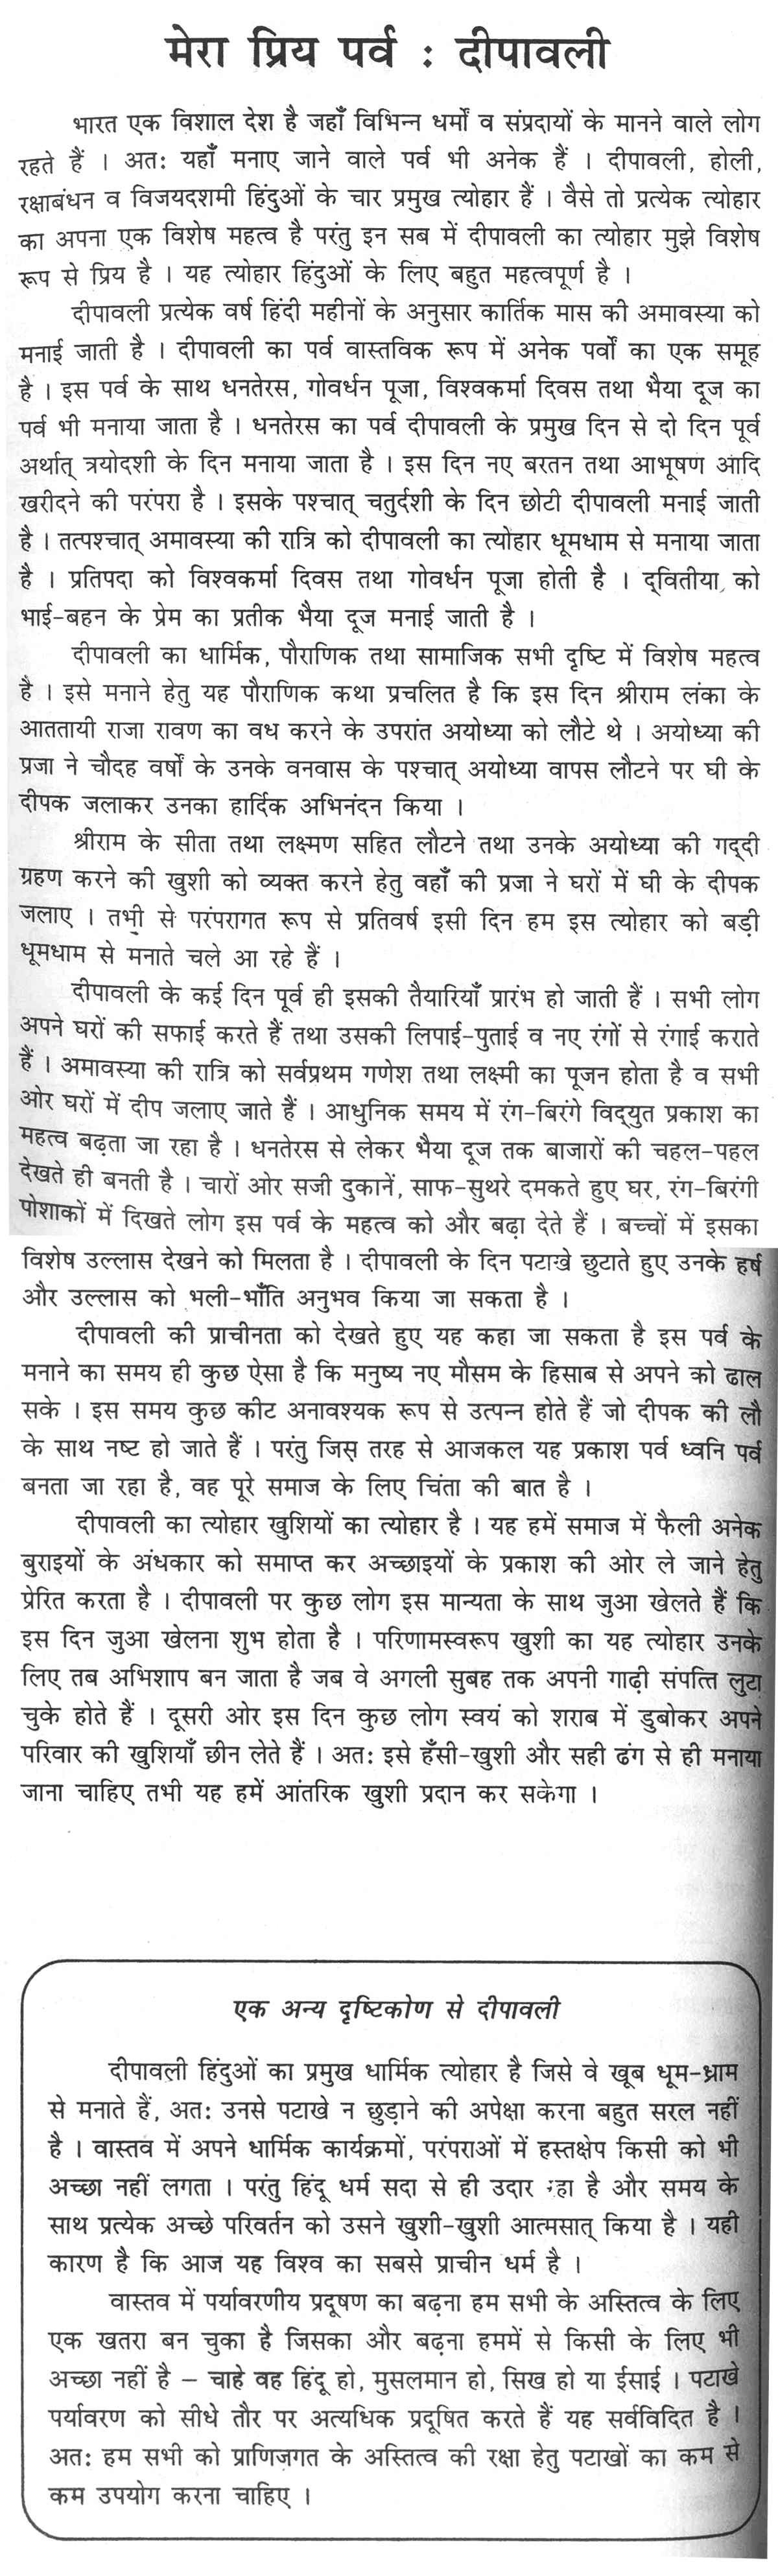 Essay on deepavali in sanskrit